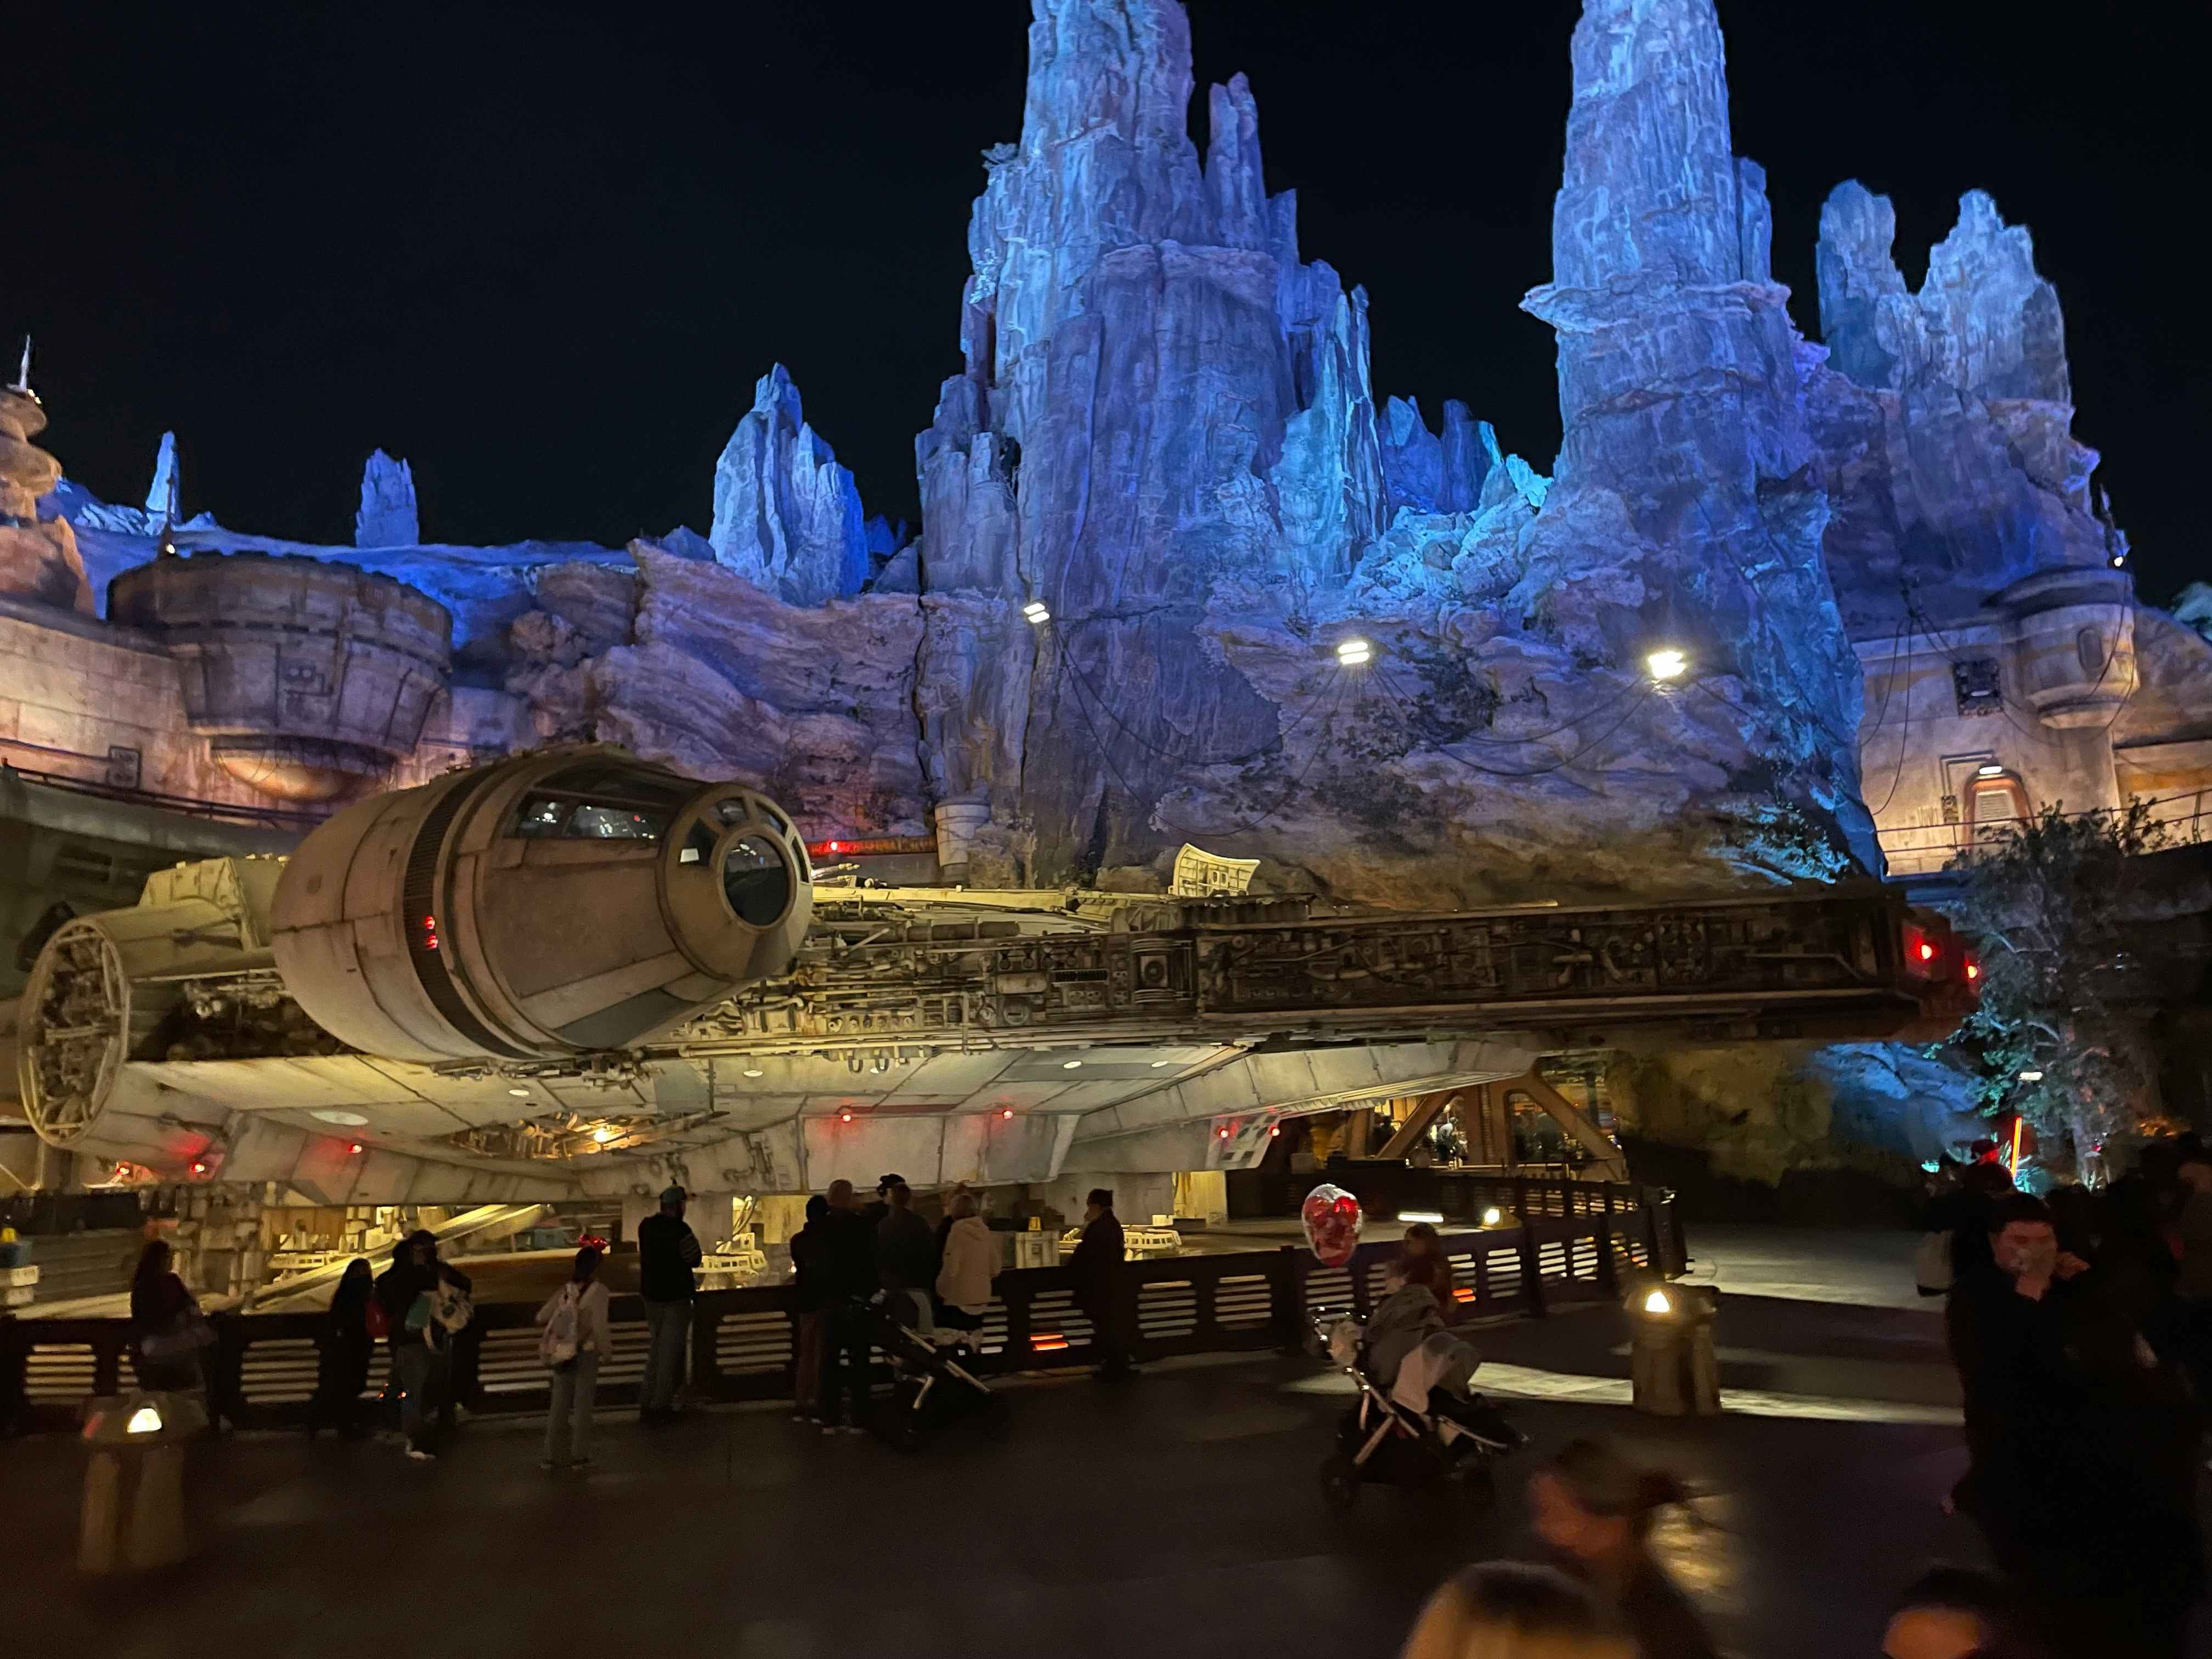 The Disneyland Star Wars Millennium Falcon ride at night.